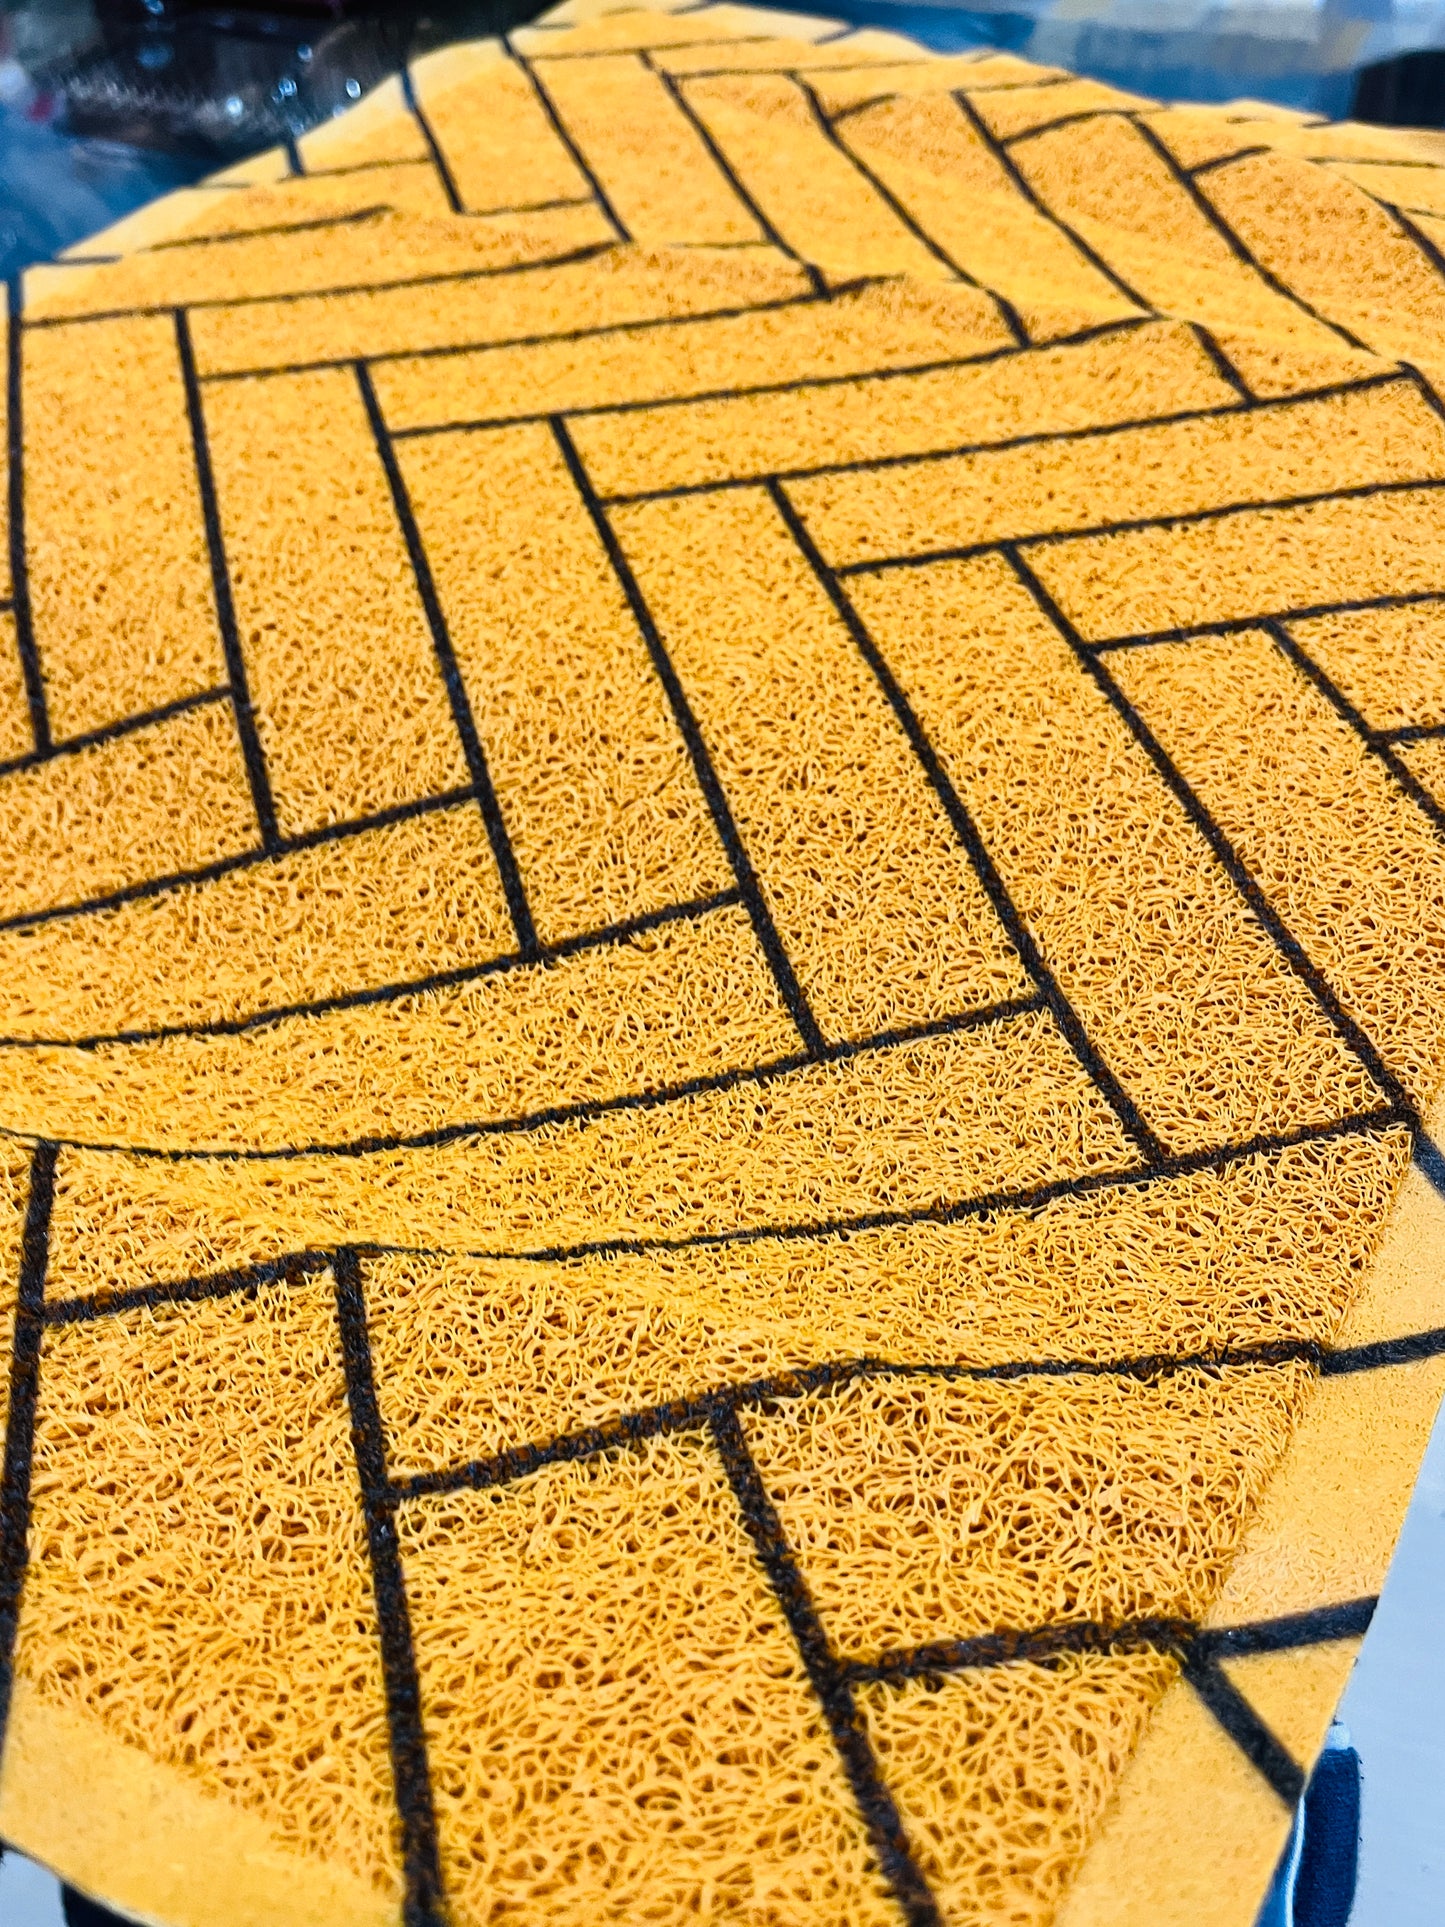 Imported floor mats